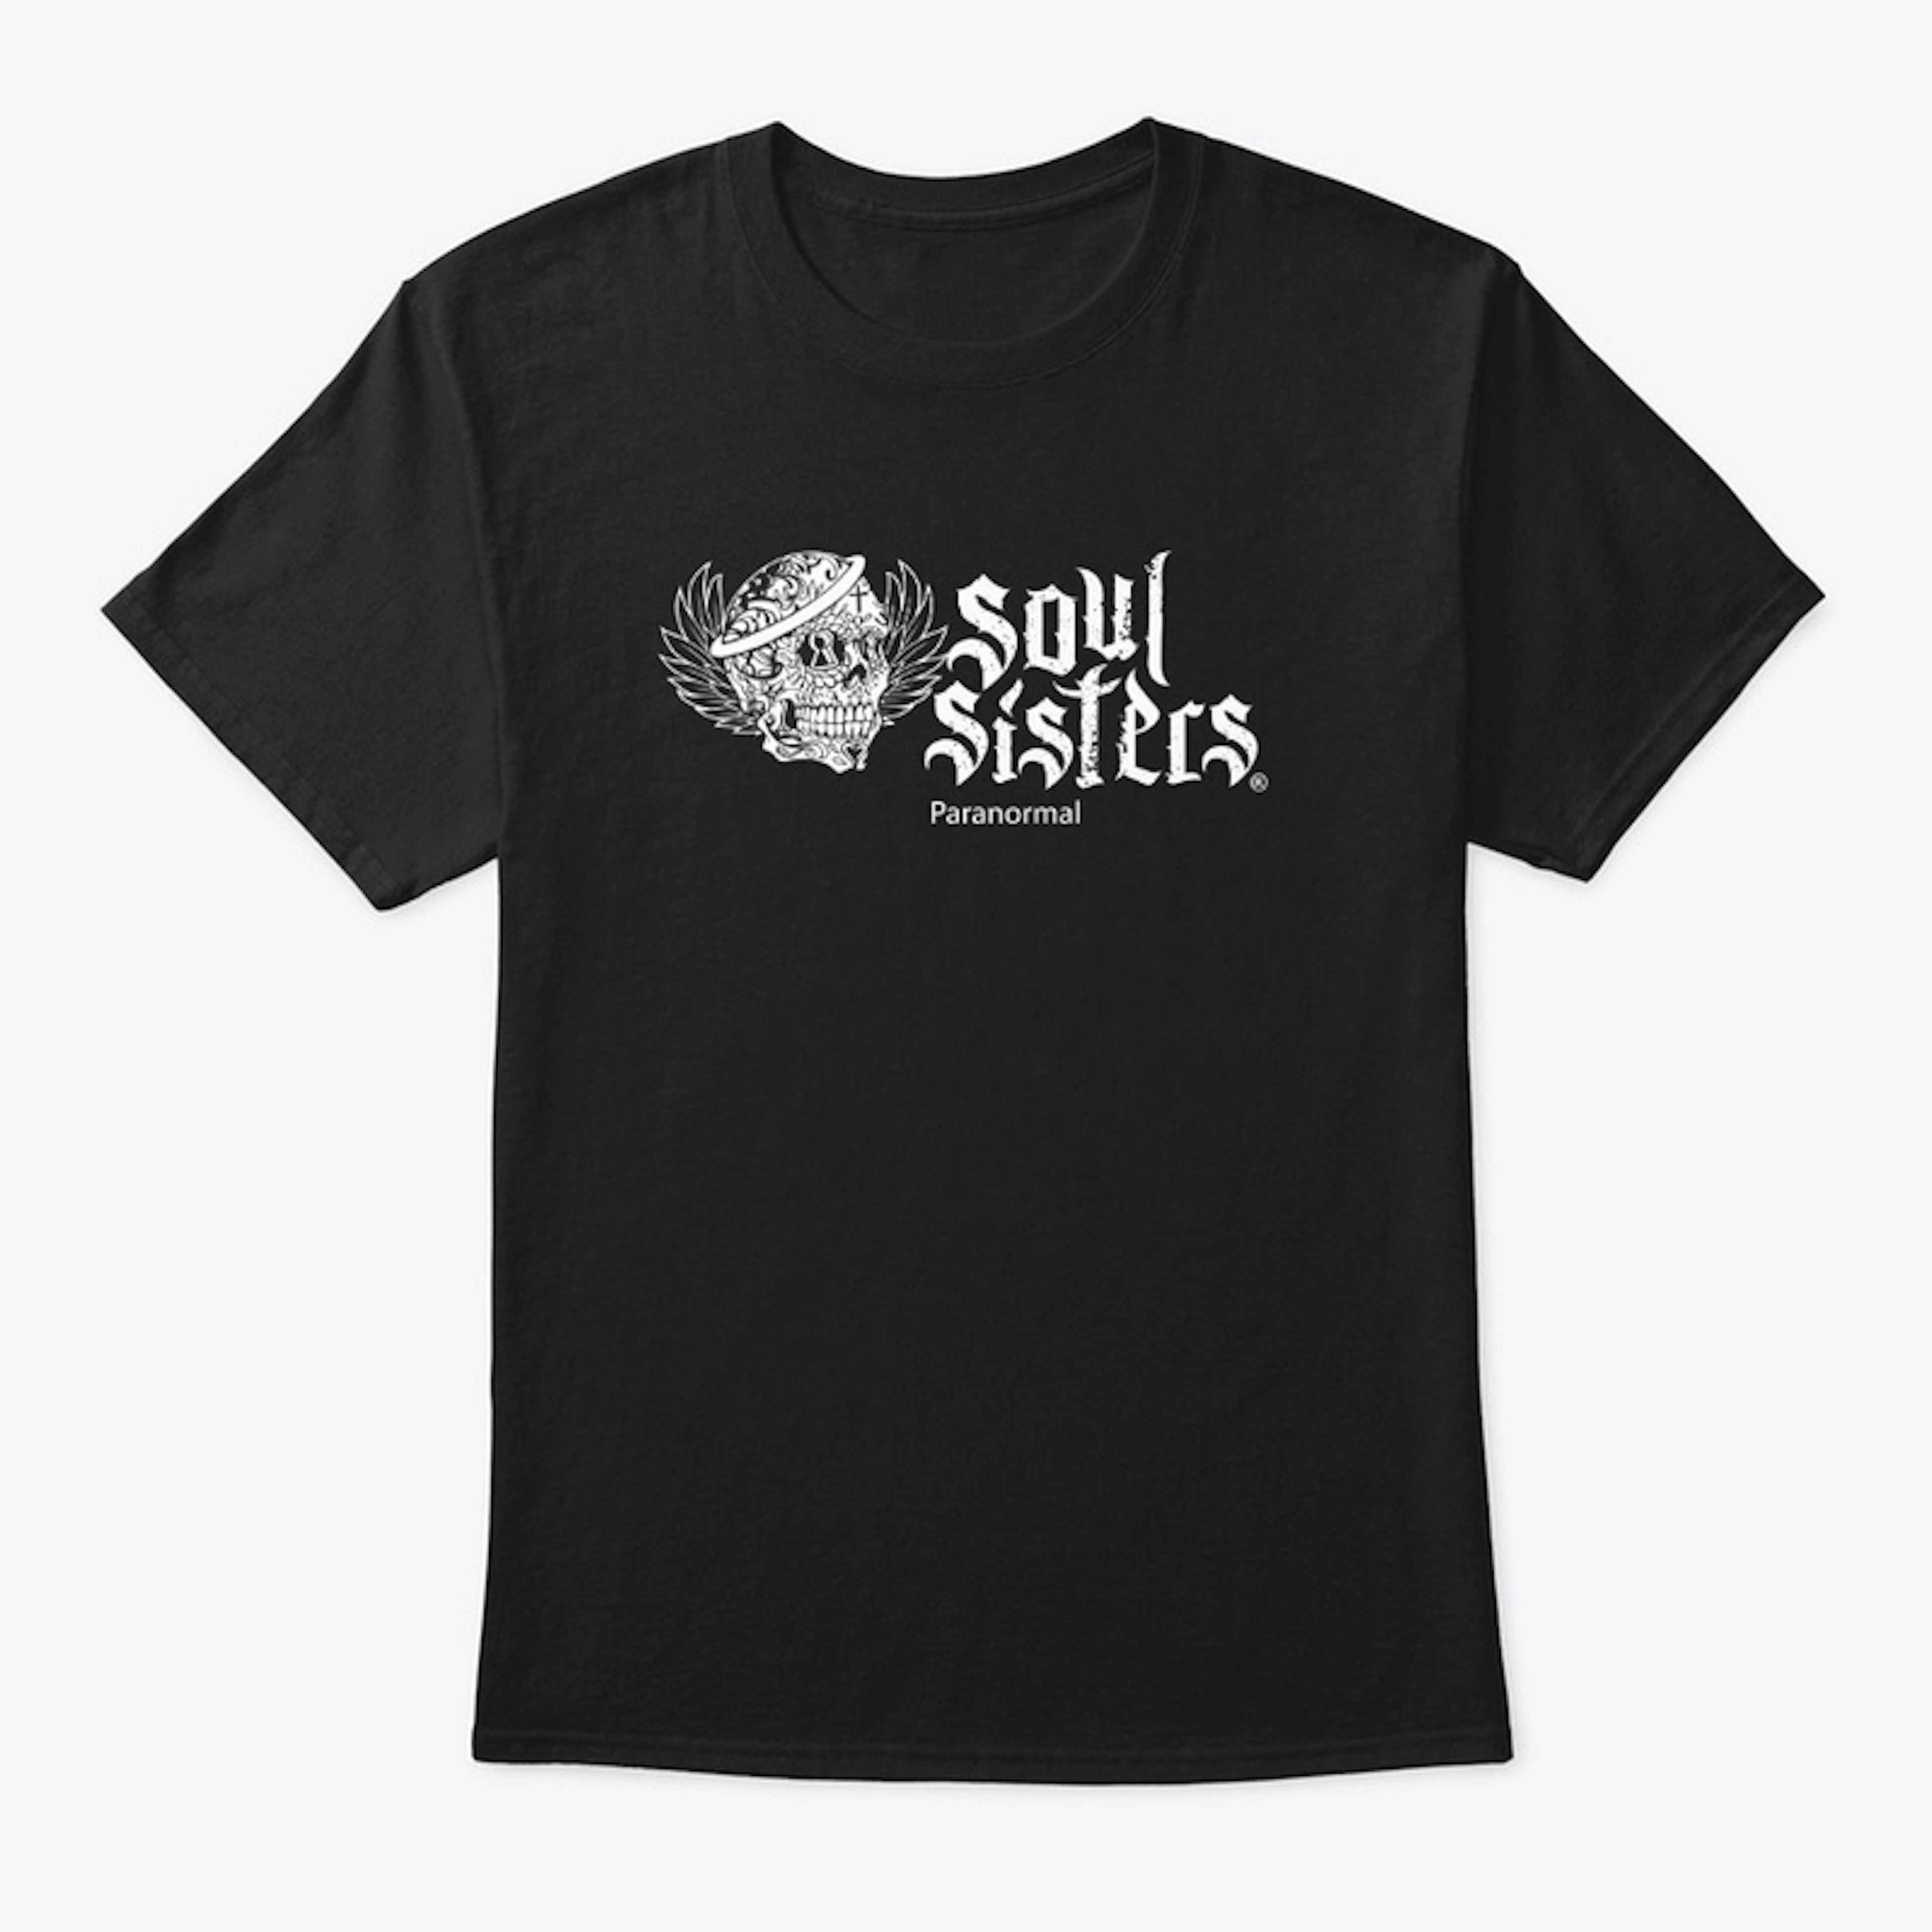 Soul Sisters Paranormal - Tshirt (black)